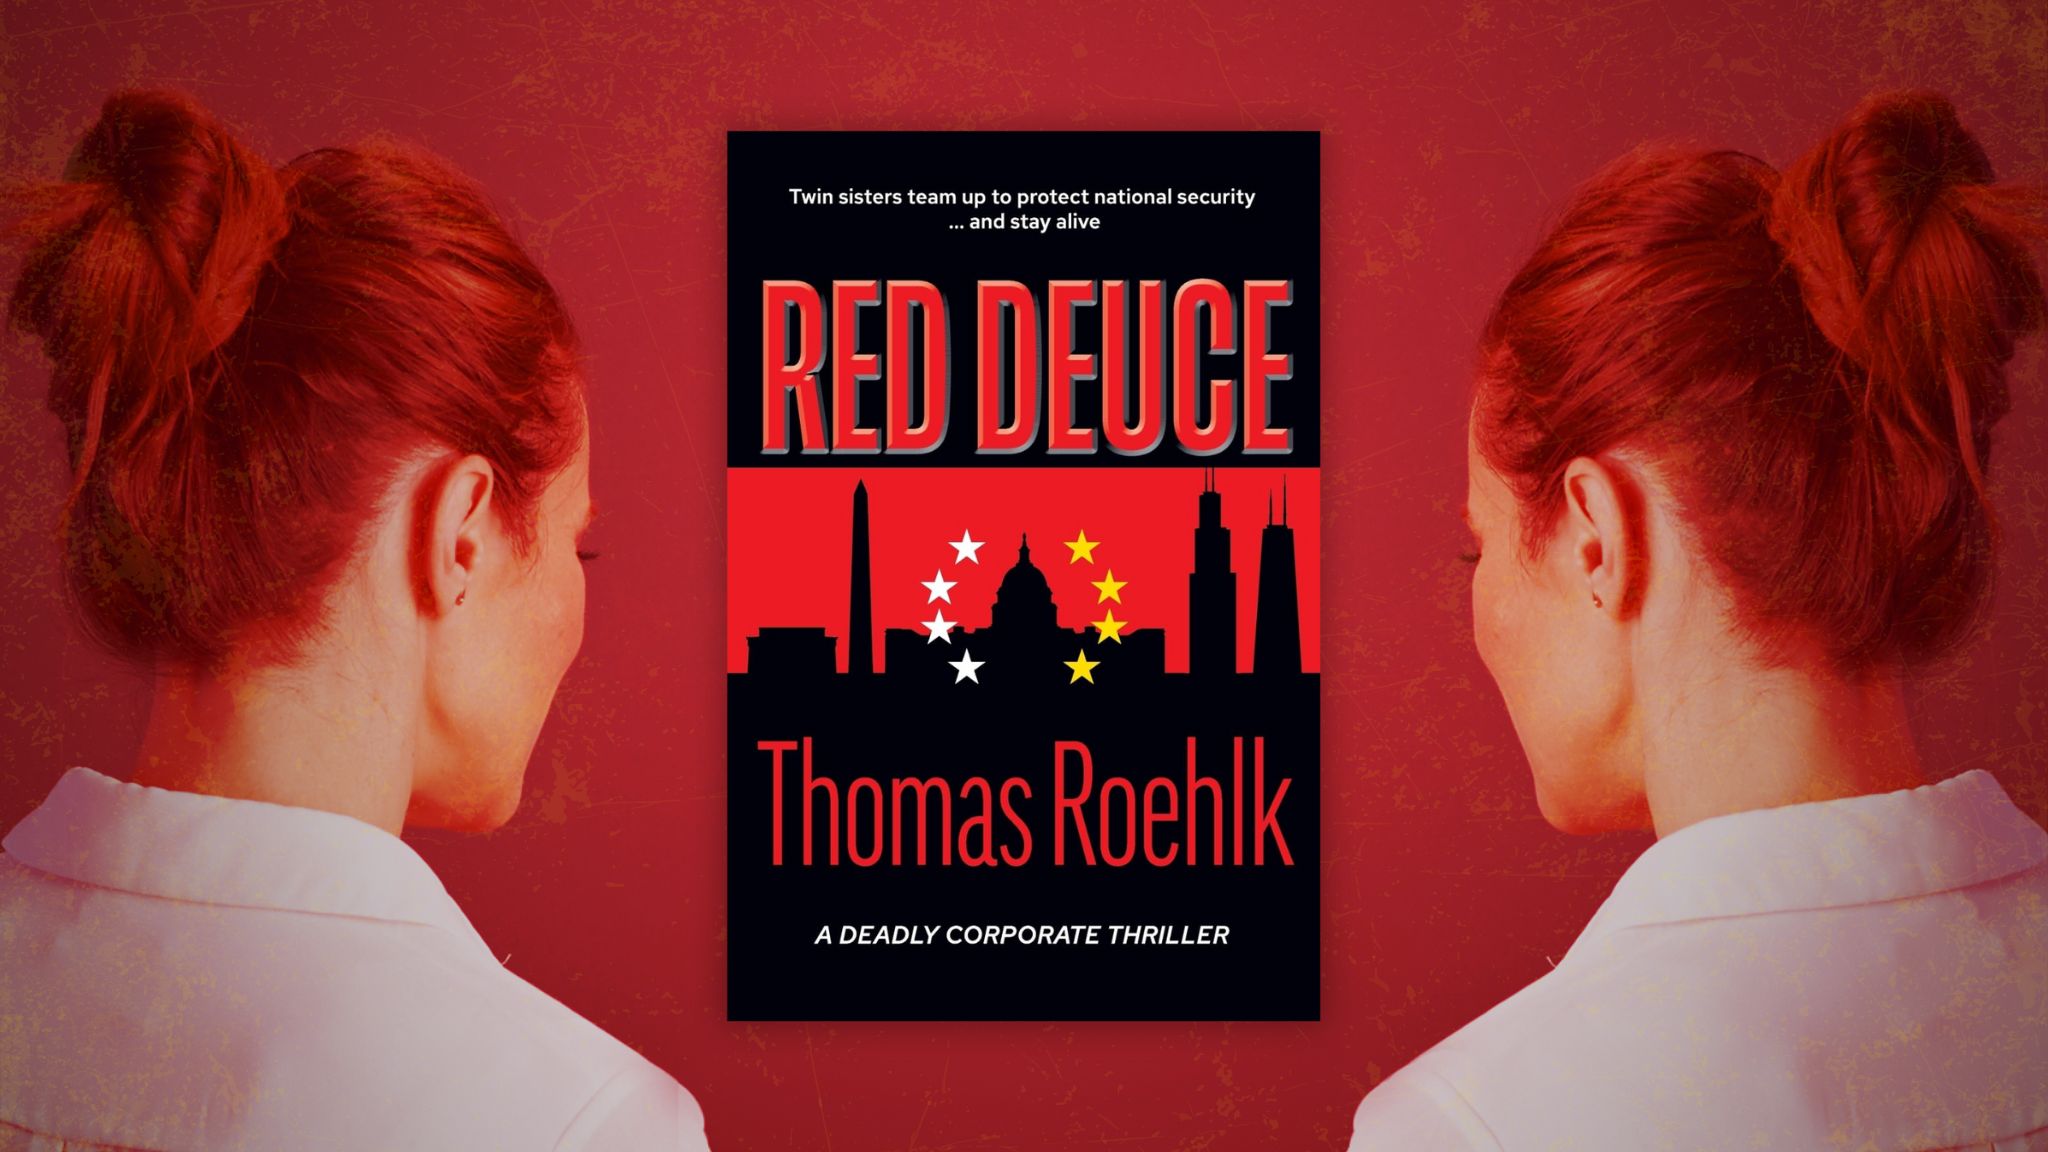 Red Deuce by Thomas Roehlk